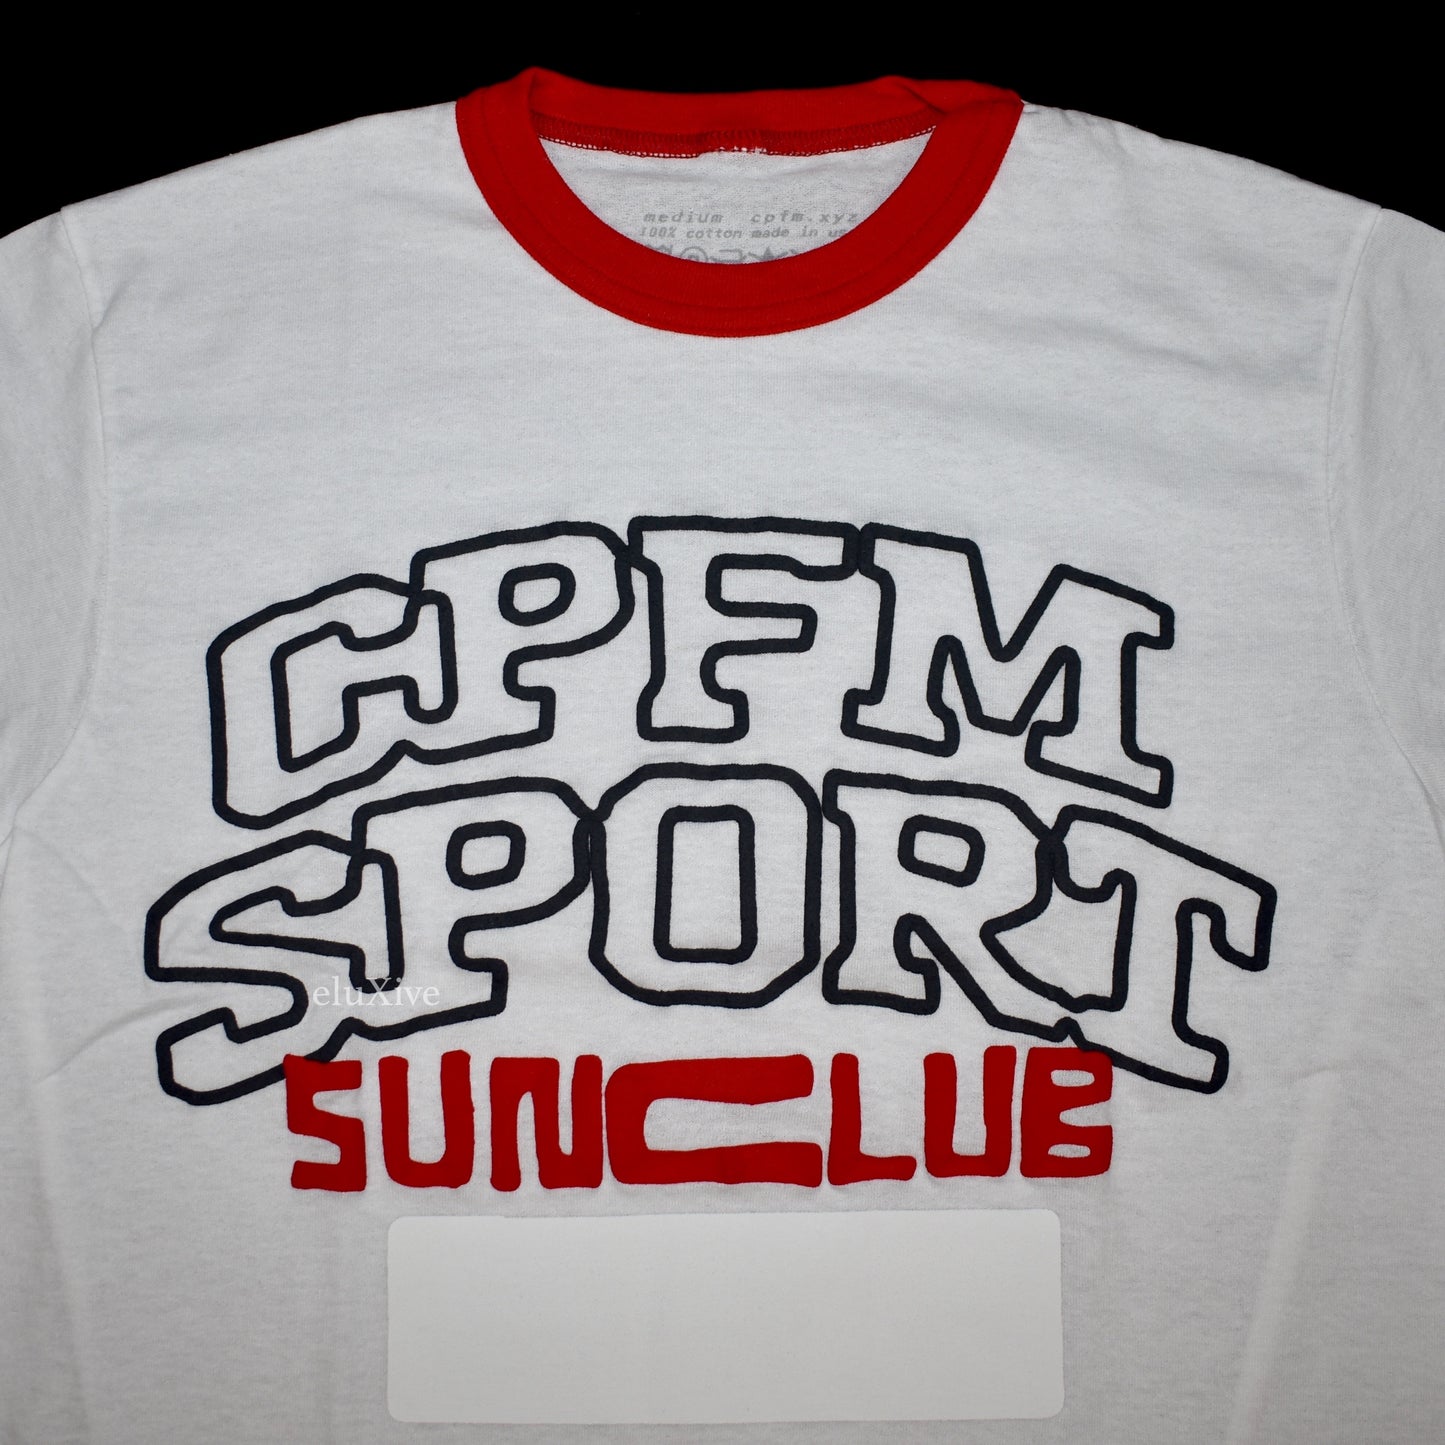 Cactus Plant Flea Market - CPFM Sport Sun Club Ringer T-Shirt